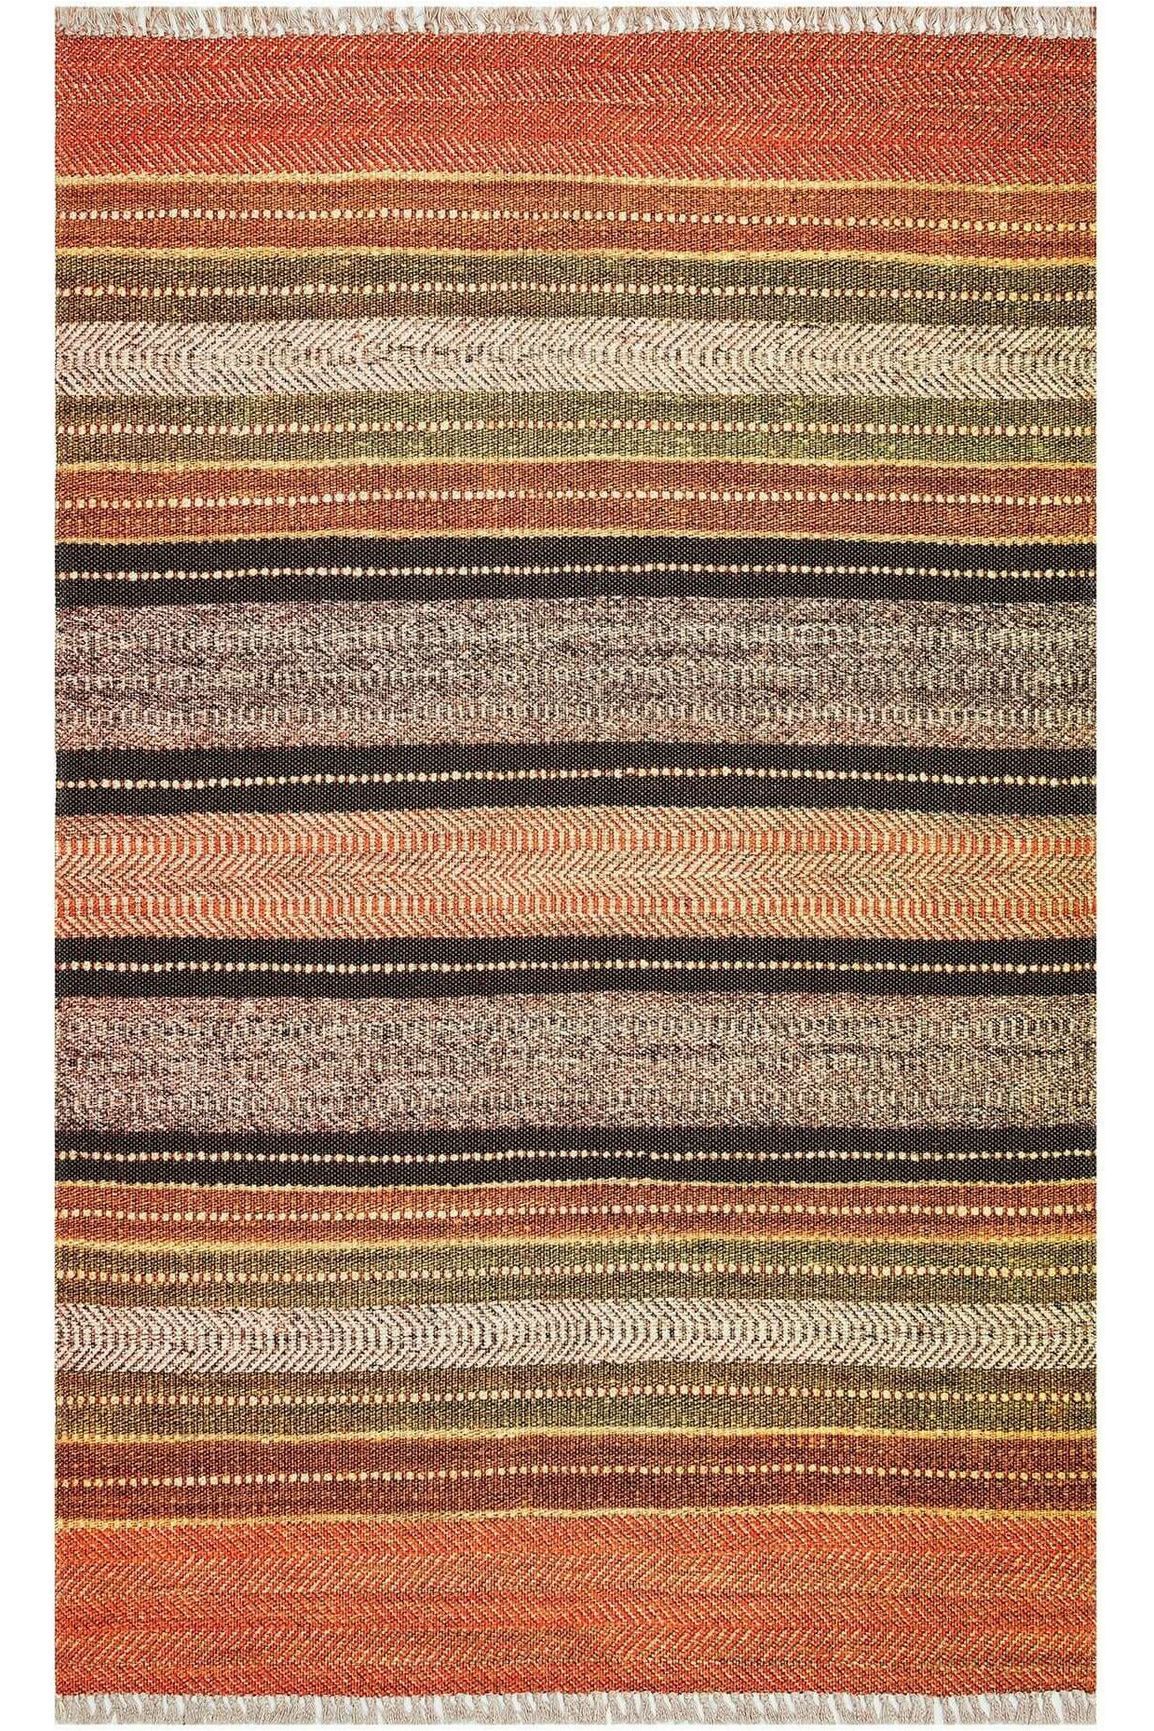 #Turkish_Carpets_Rugs# #Modern_Carpets# #Abrash_Carpets#As 02 Terra